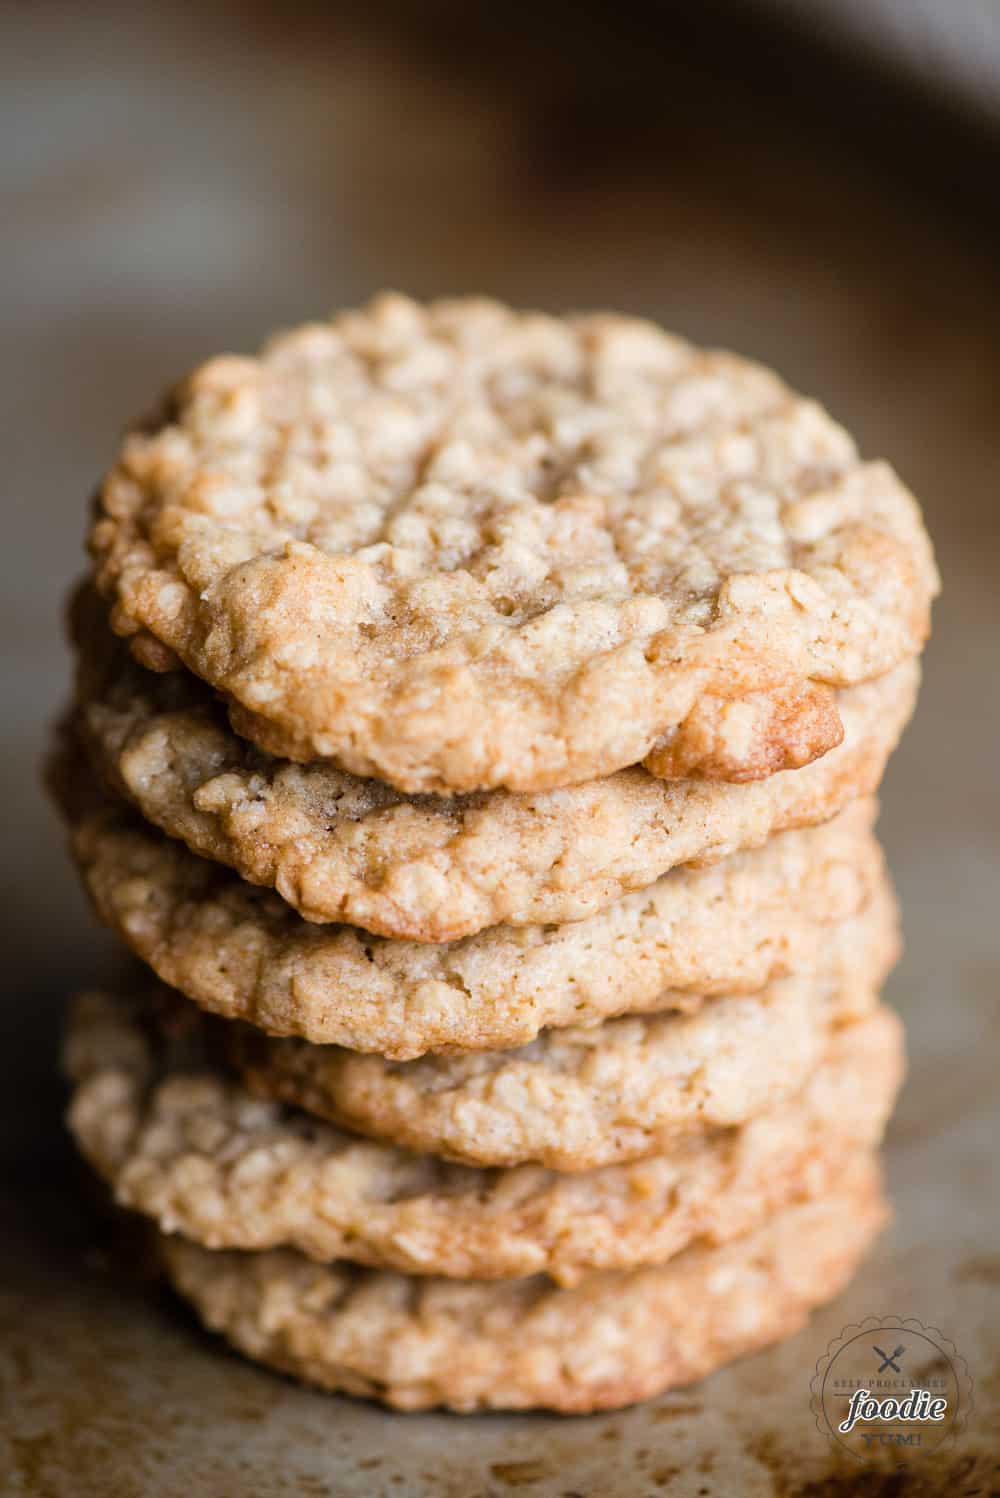 oatmeal cookie recipe